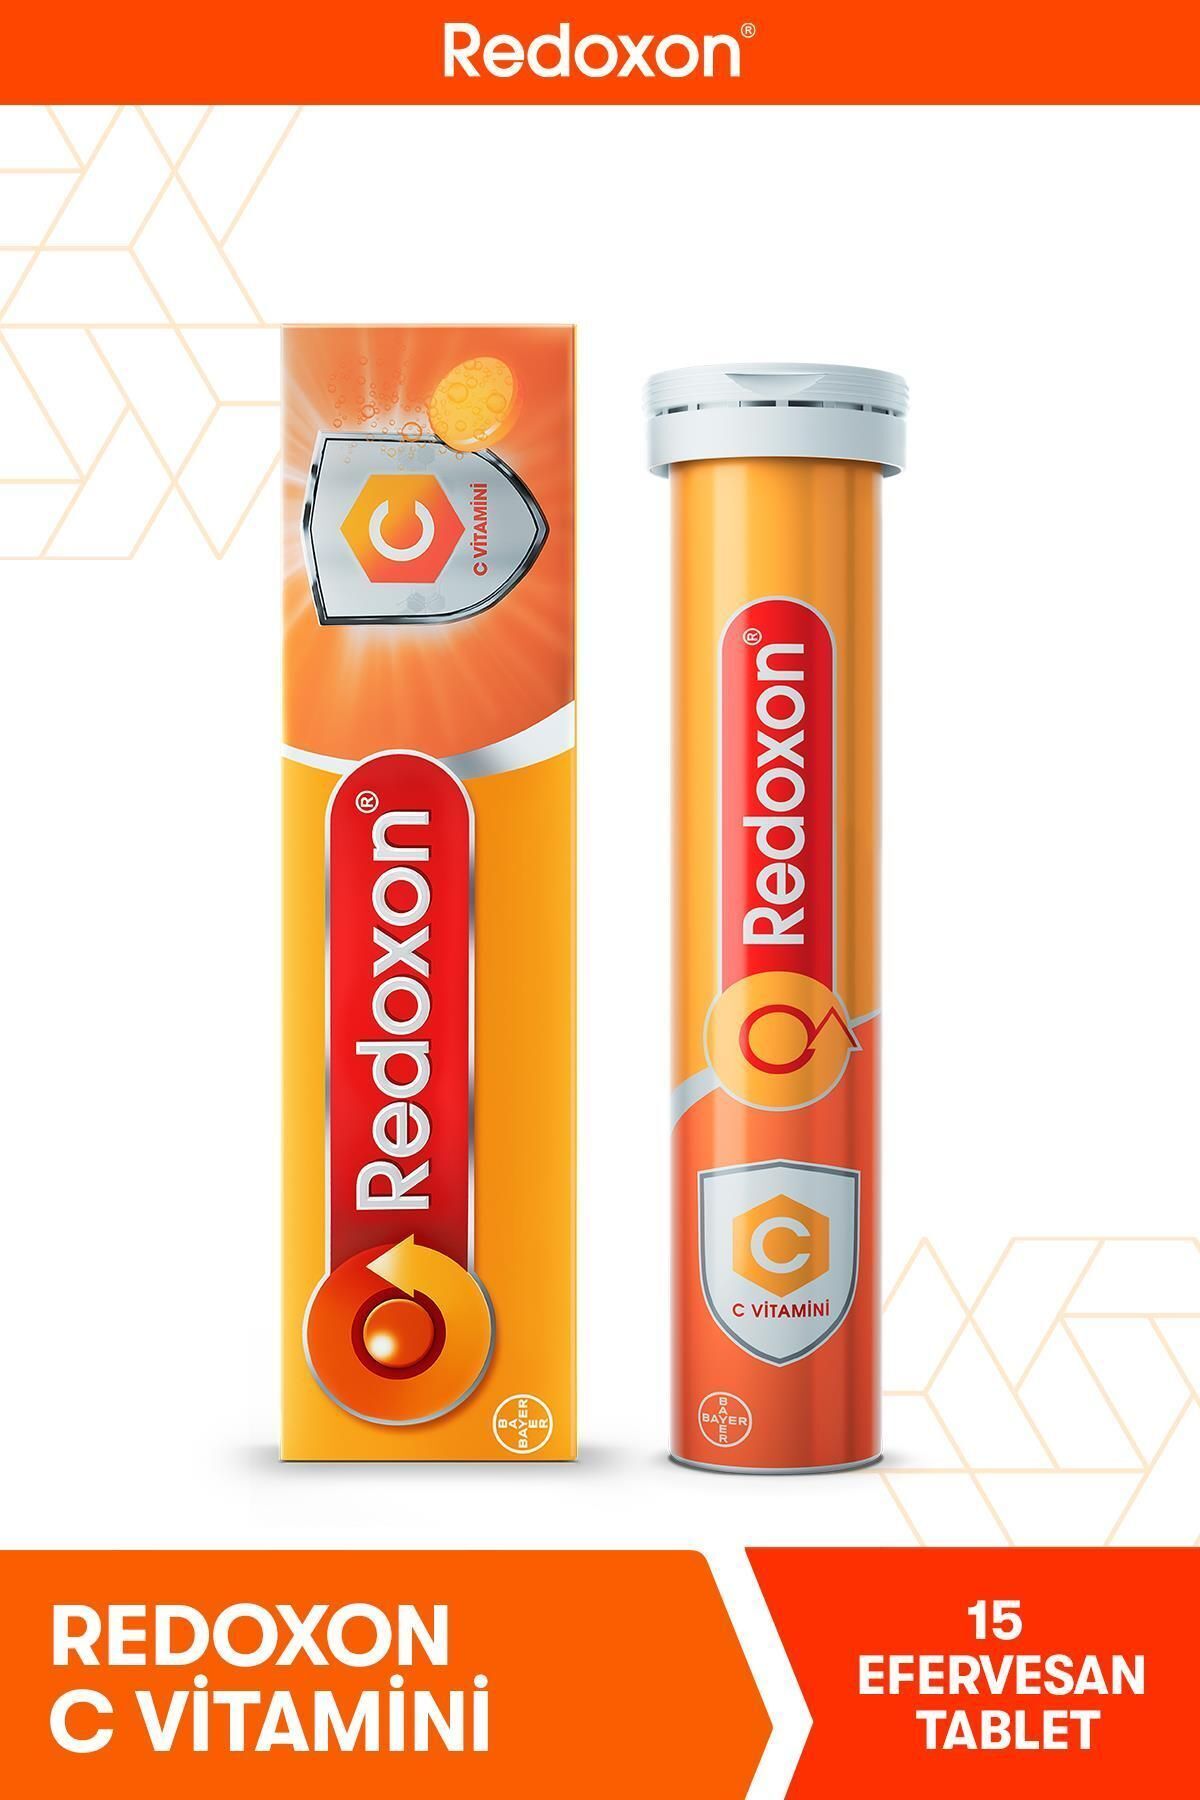 Redoxon C Vitamini 15 Efervesan Tablet I 1000 Mg C Vitamini Içeren Takviye Edici Gıda